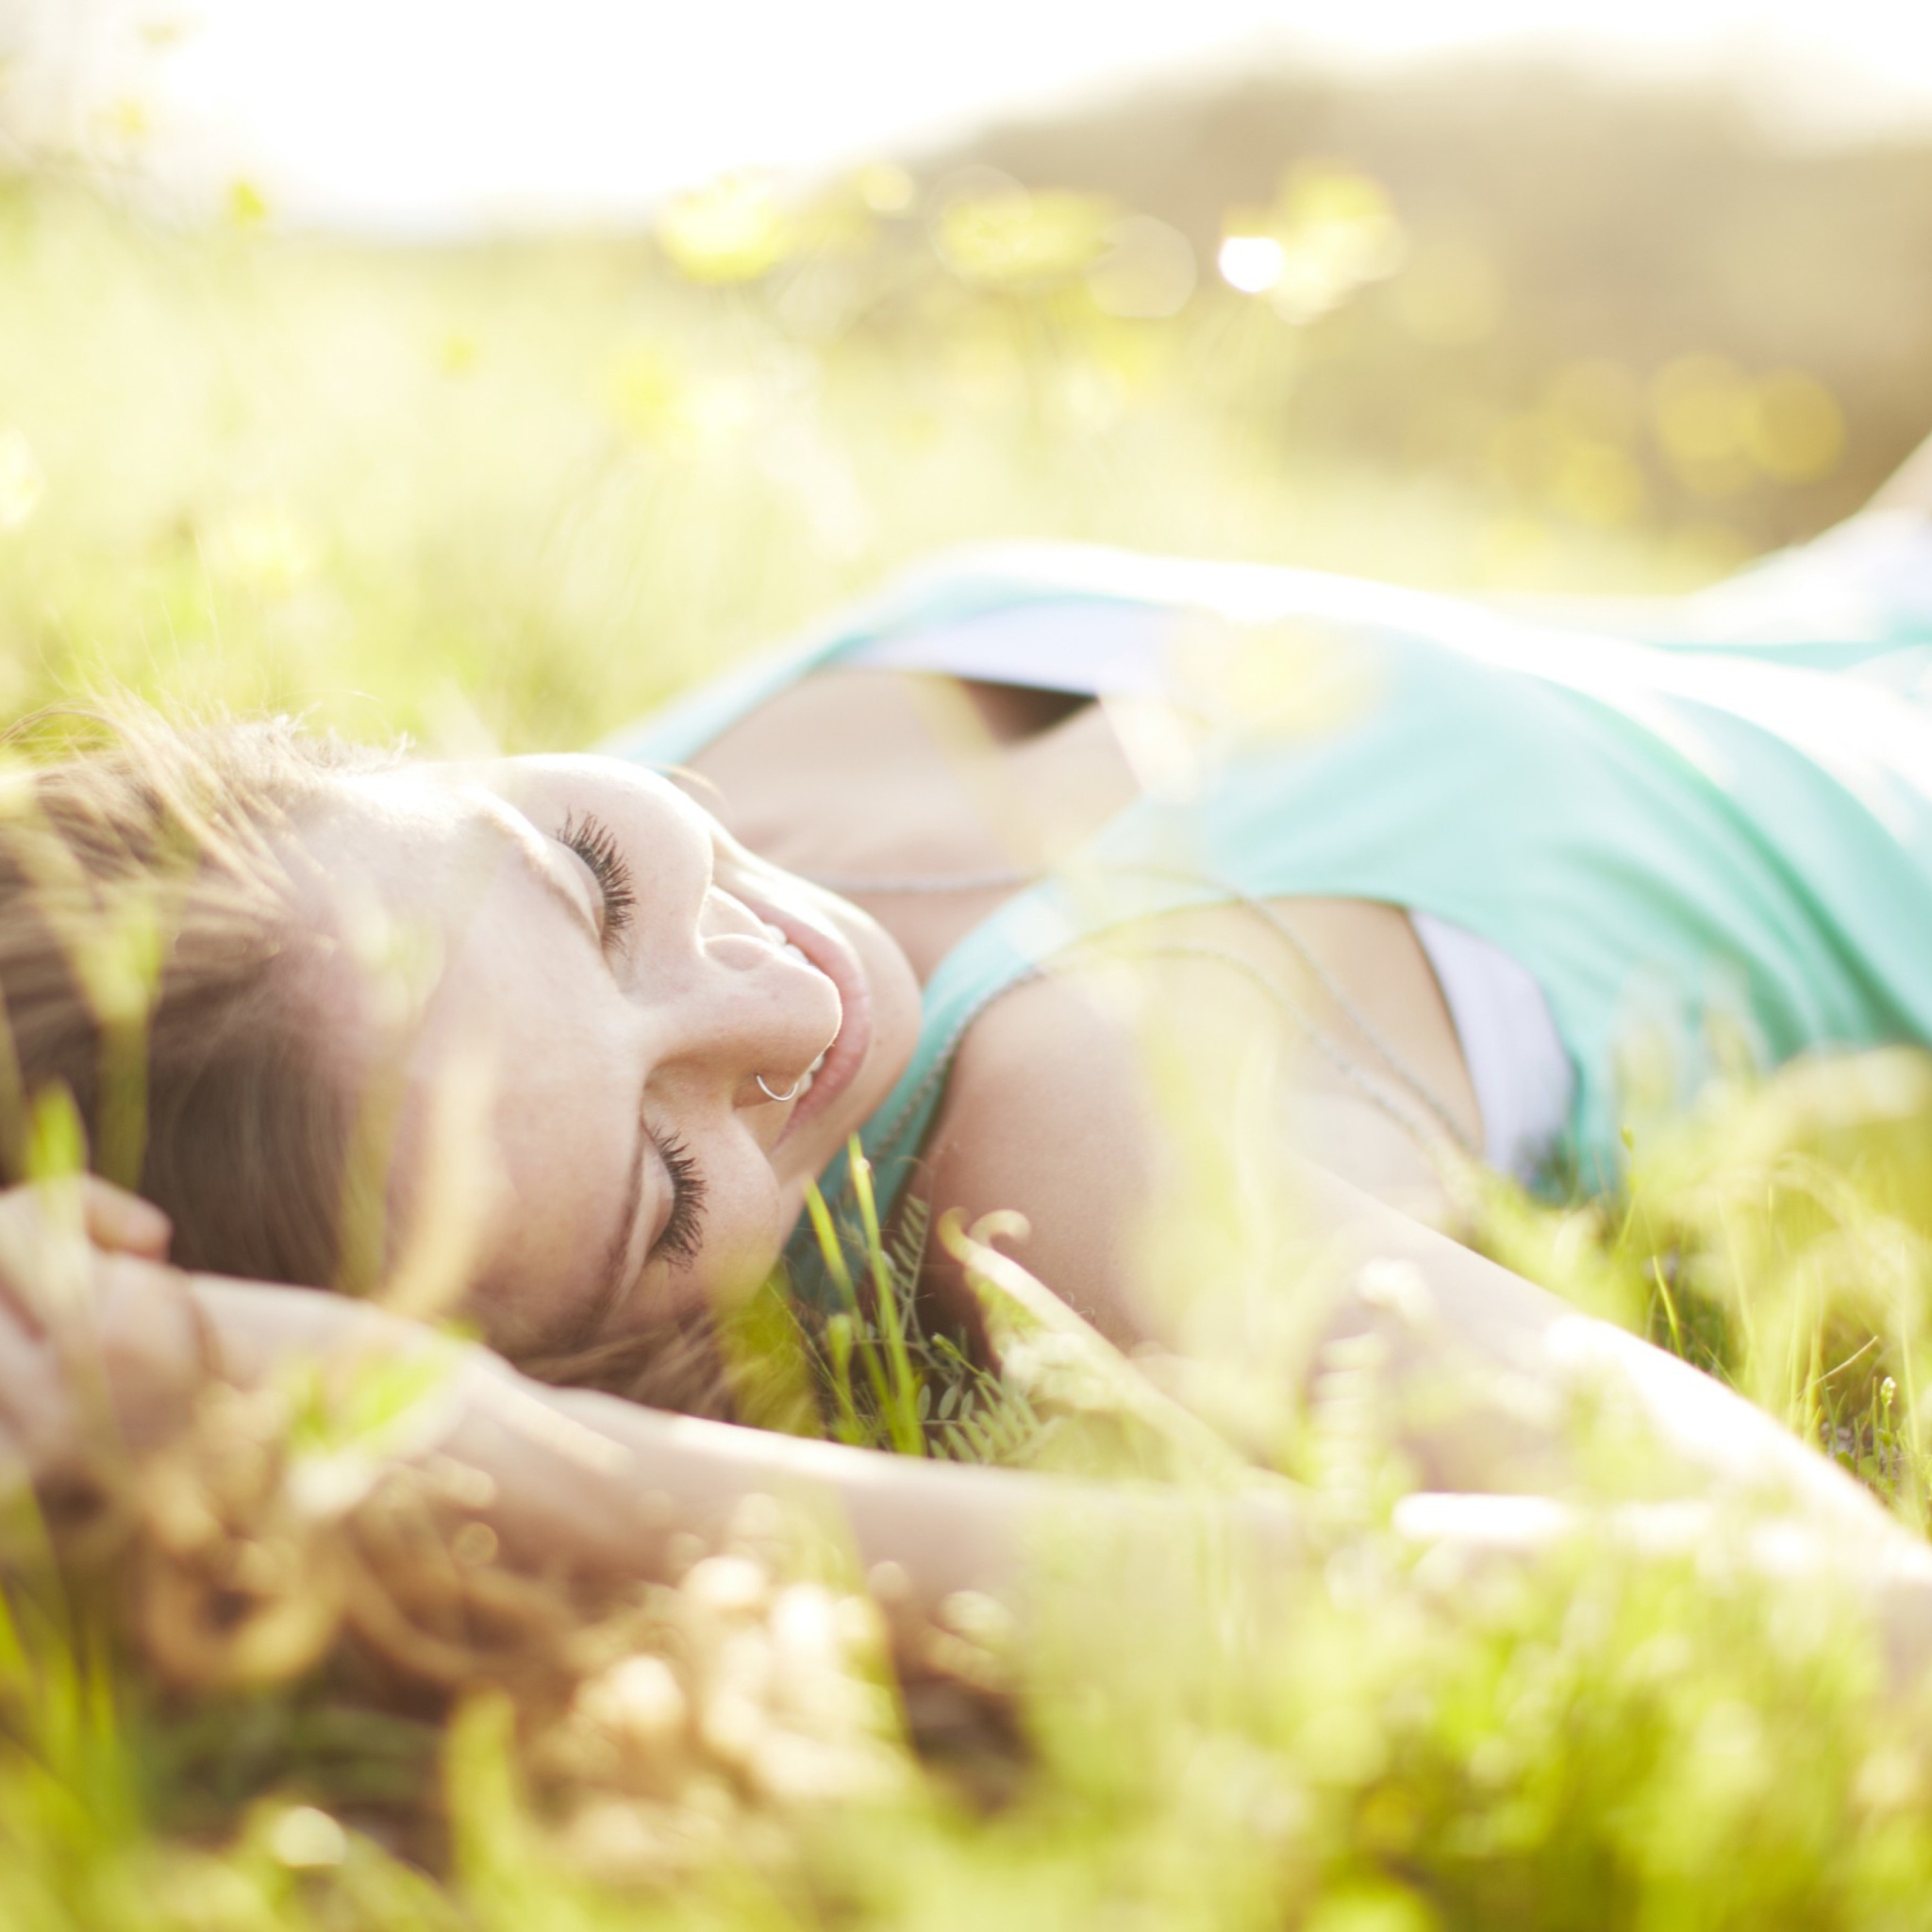 Das Happy Girl Lying In Grass In Sunlight Wallpaper 2048x2048